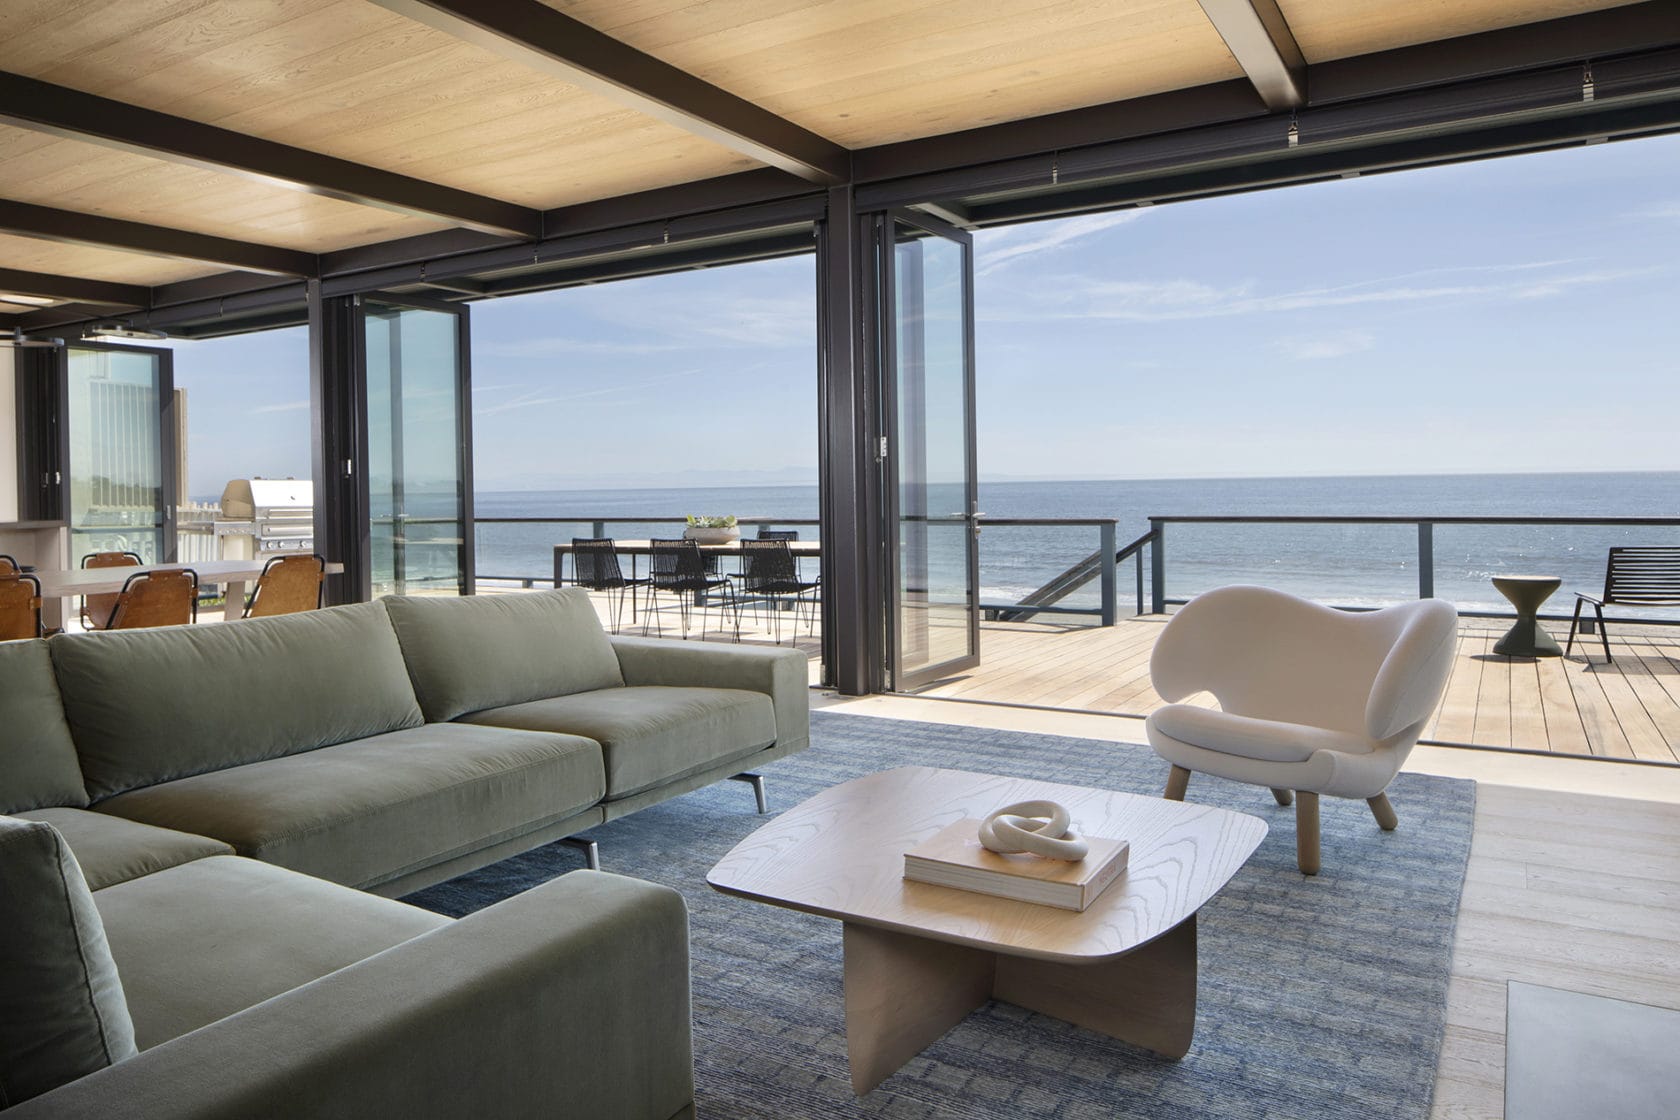 Living Room - Modern California Beach House